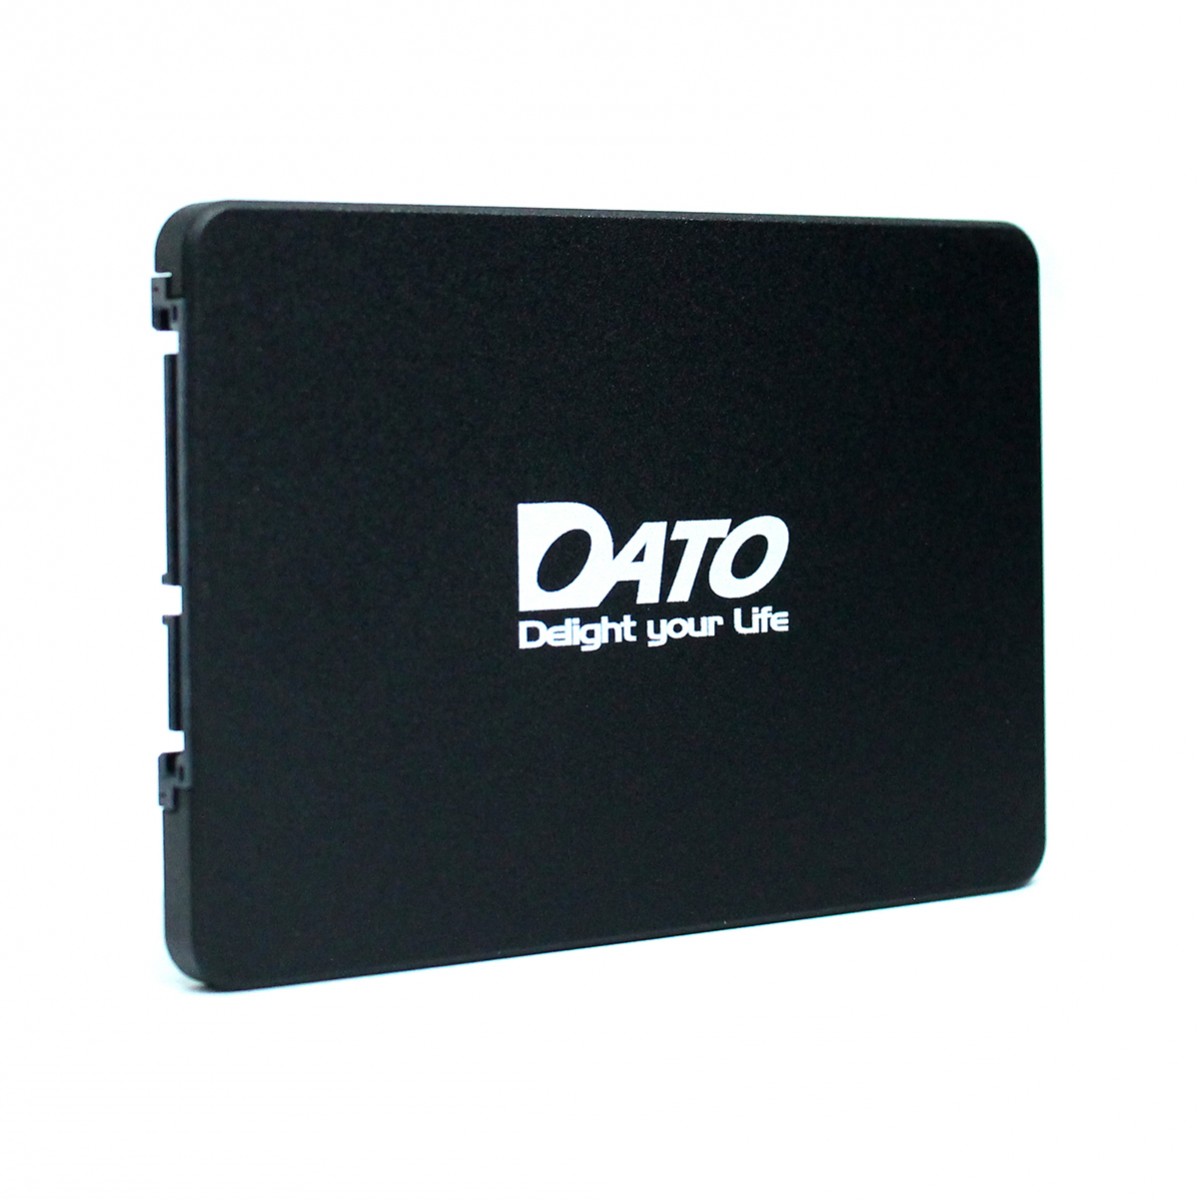 SSD Dato DS700, 120GB, Sata III, Leitura 550MBs e Gravação 435MBs